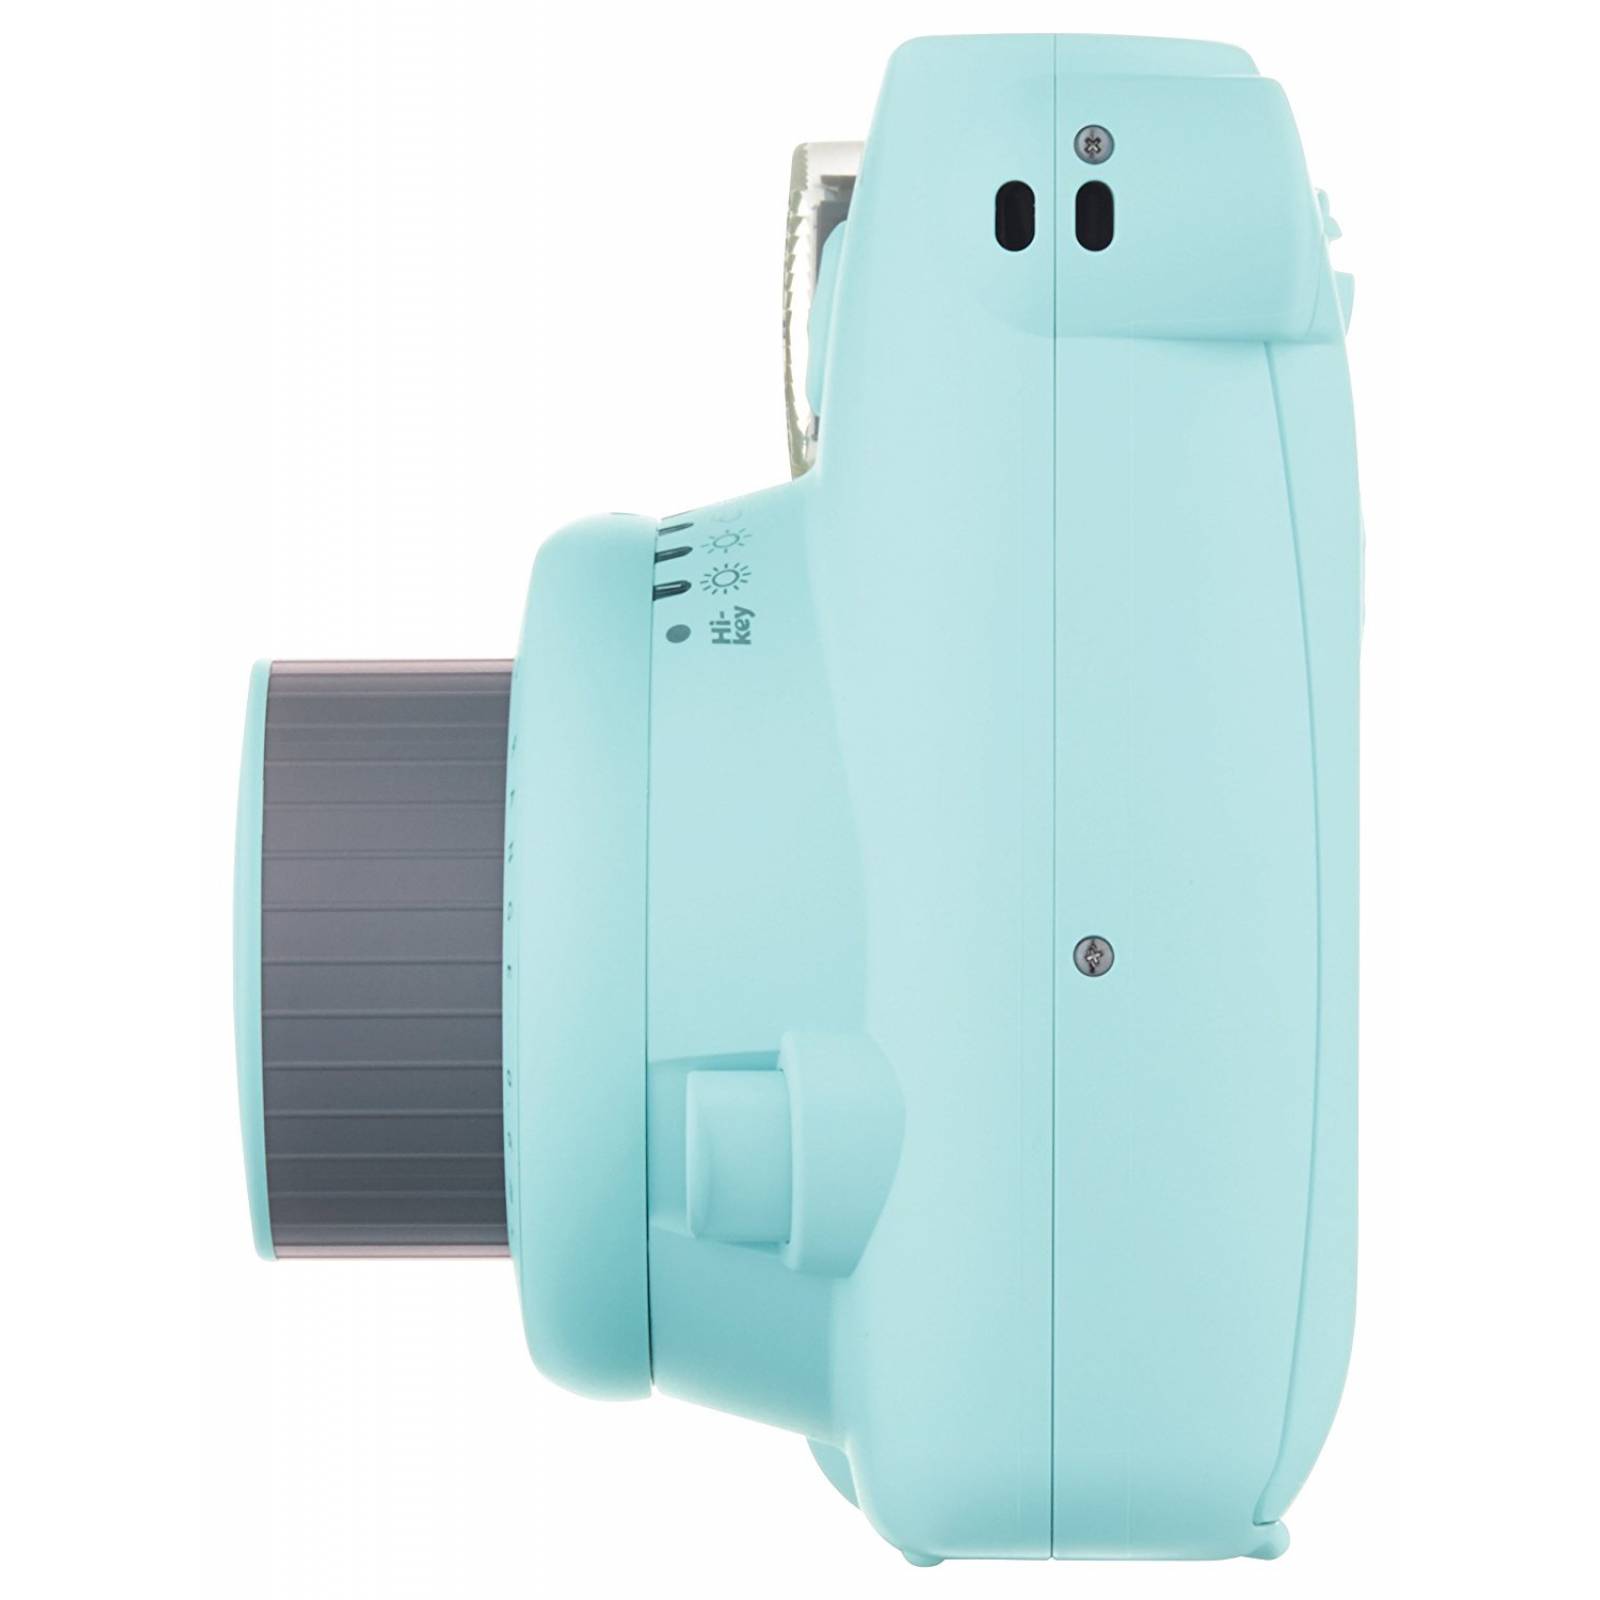 Fujifilm Instax Mini 9 - c?mara instant?nea azul hielo -Azul